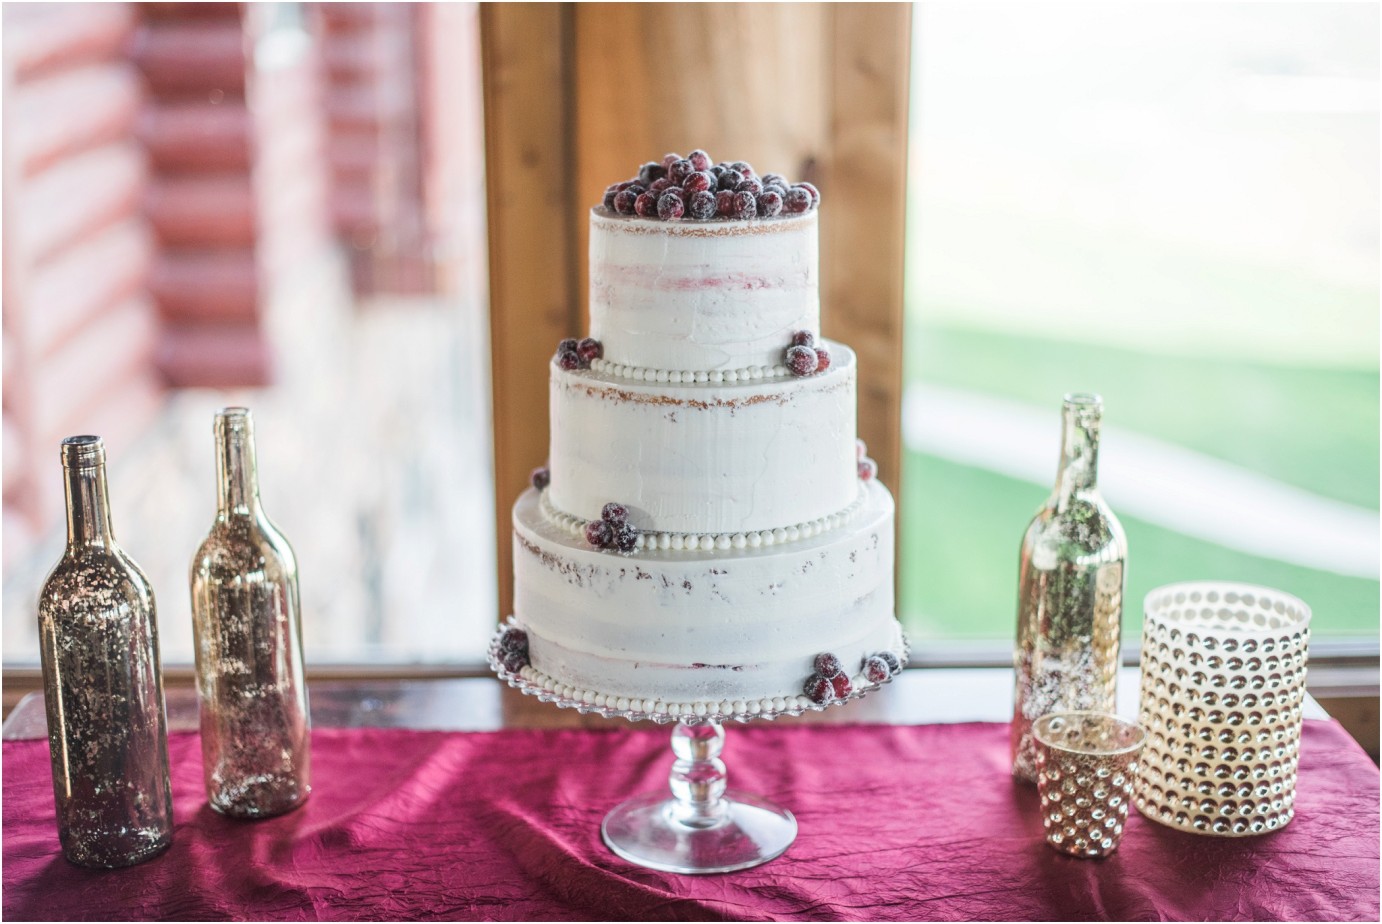 Eagle Lakes Lodge Wedding Inspiration Shoot sugared cranberry cake photo